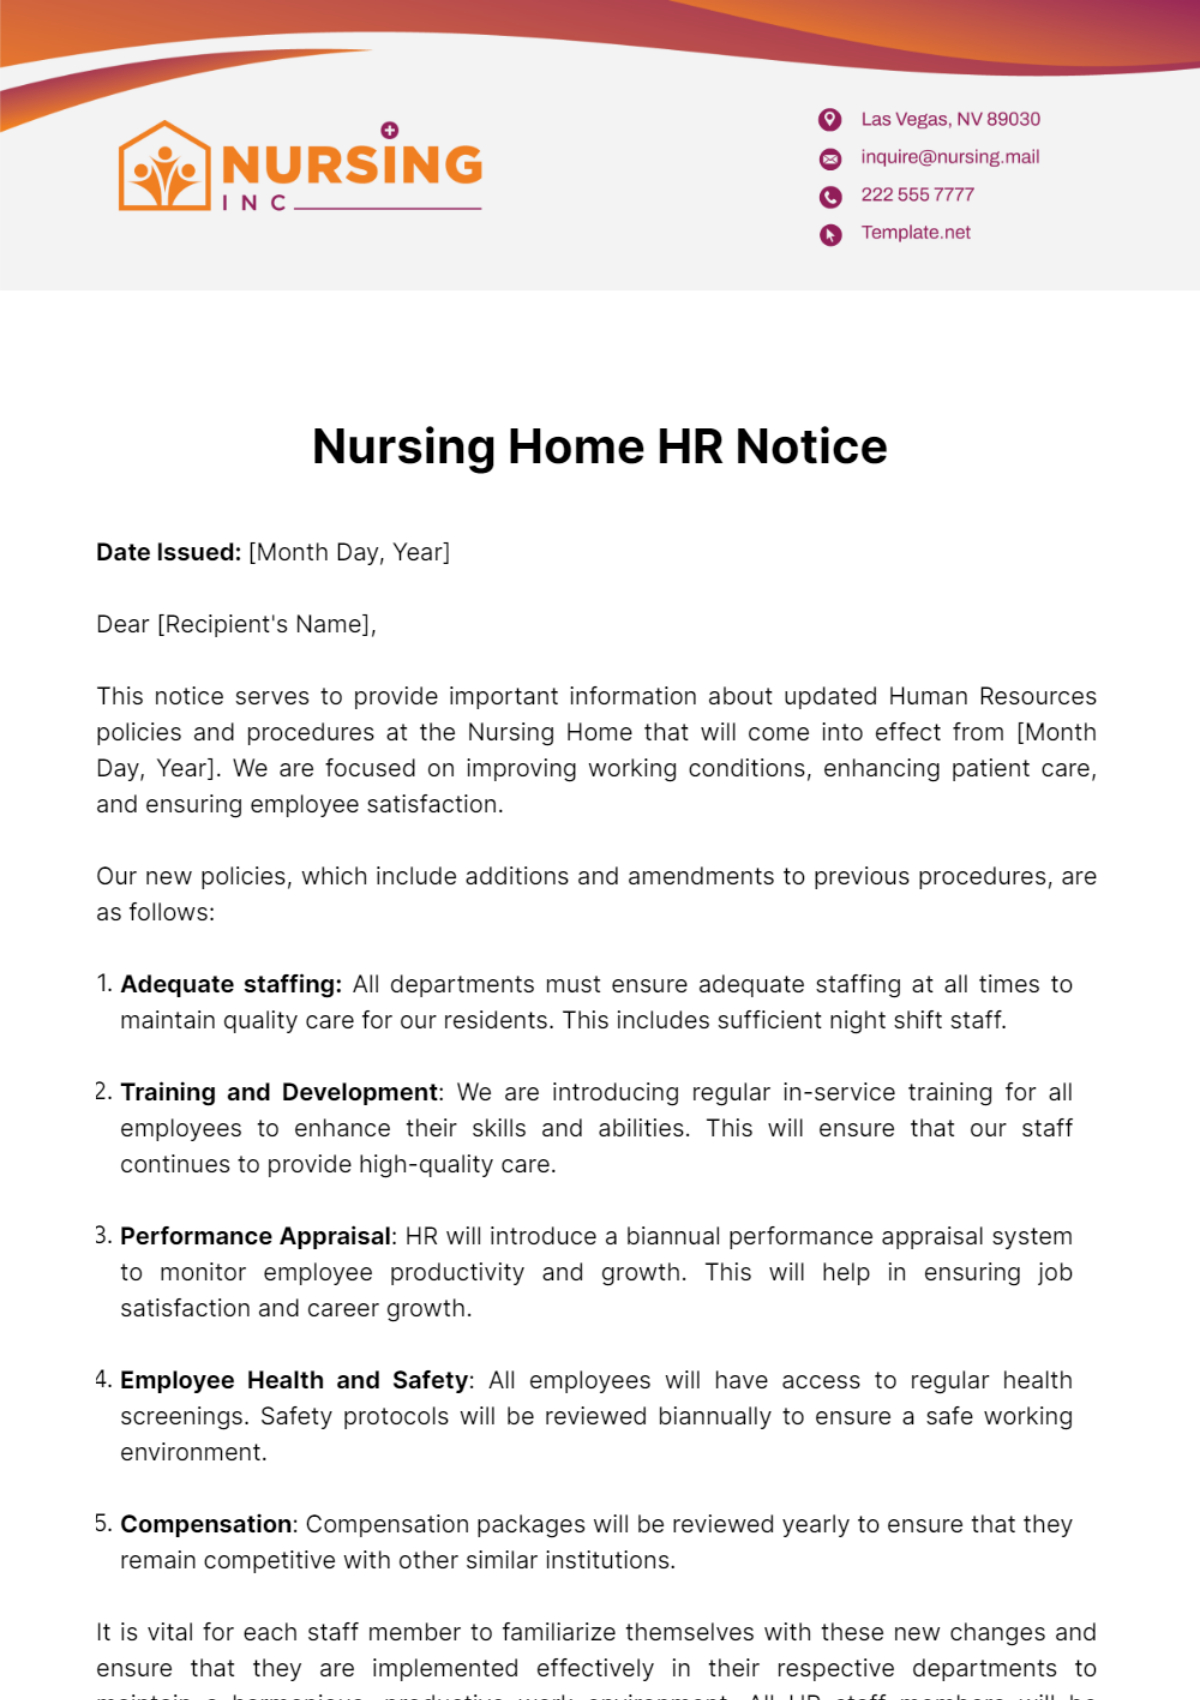 Nursing Home HR Notice Template